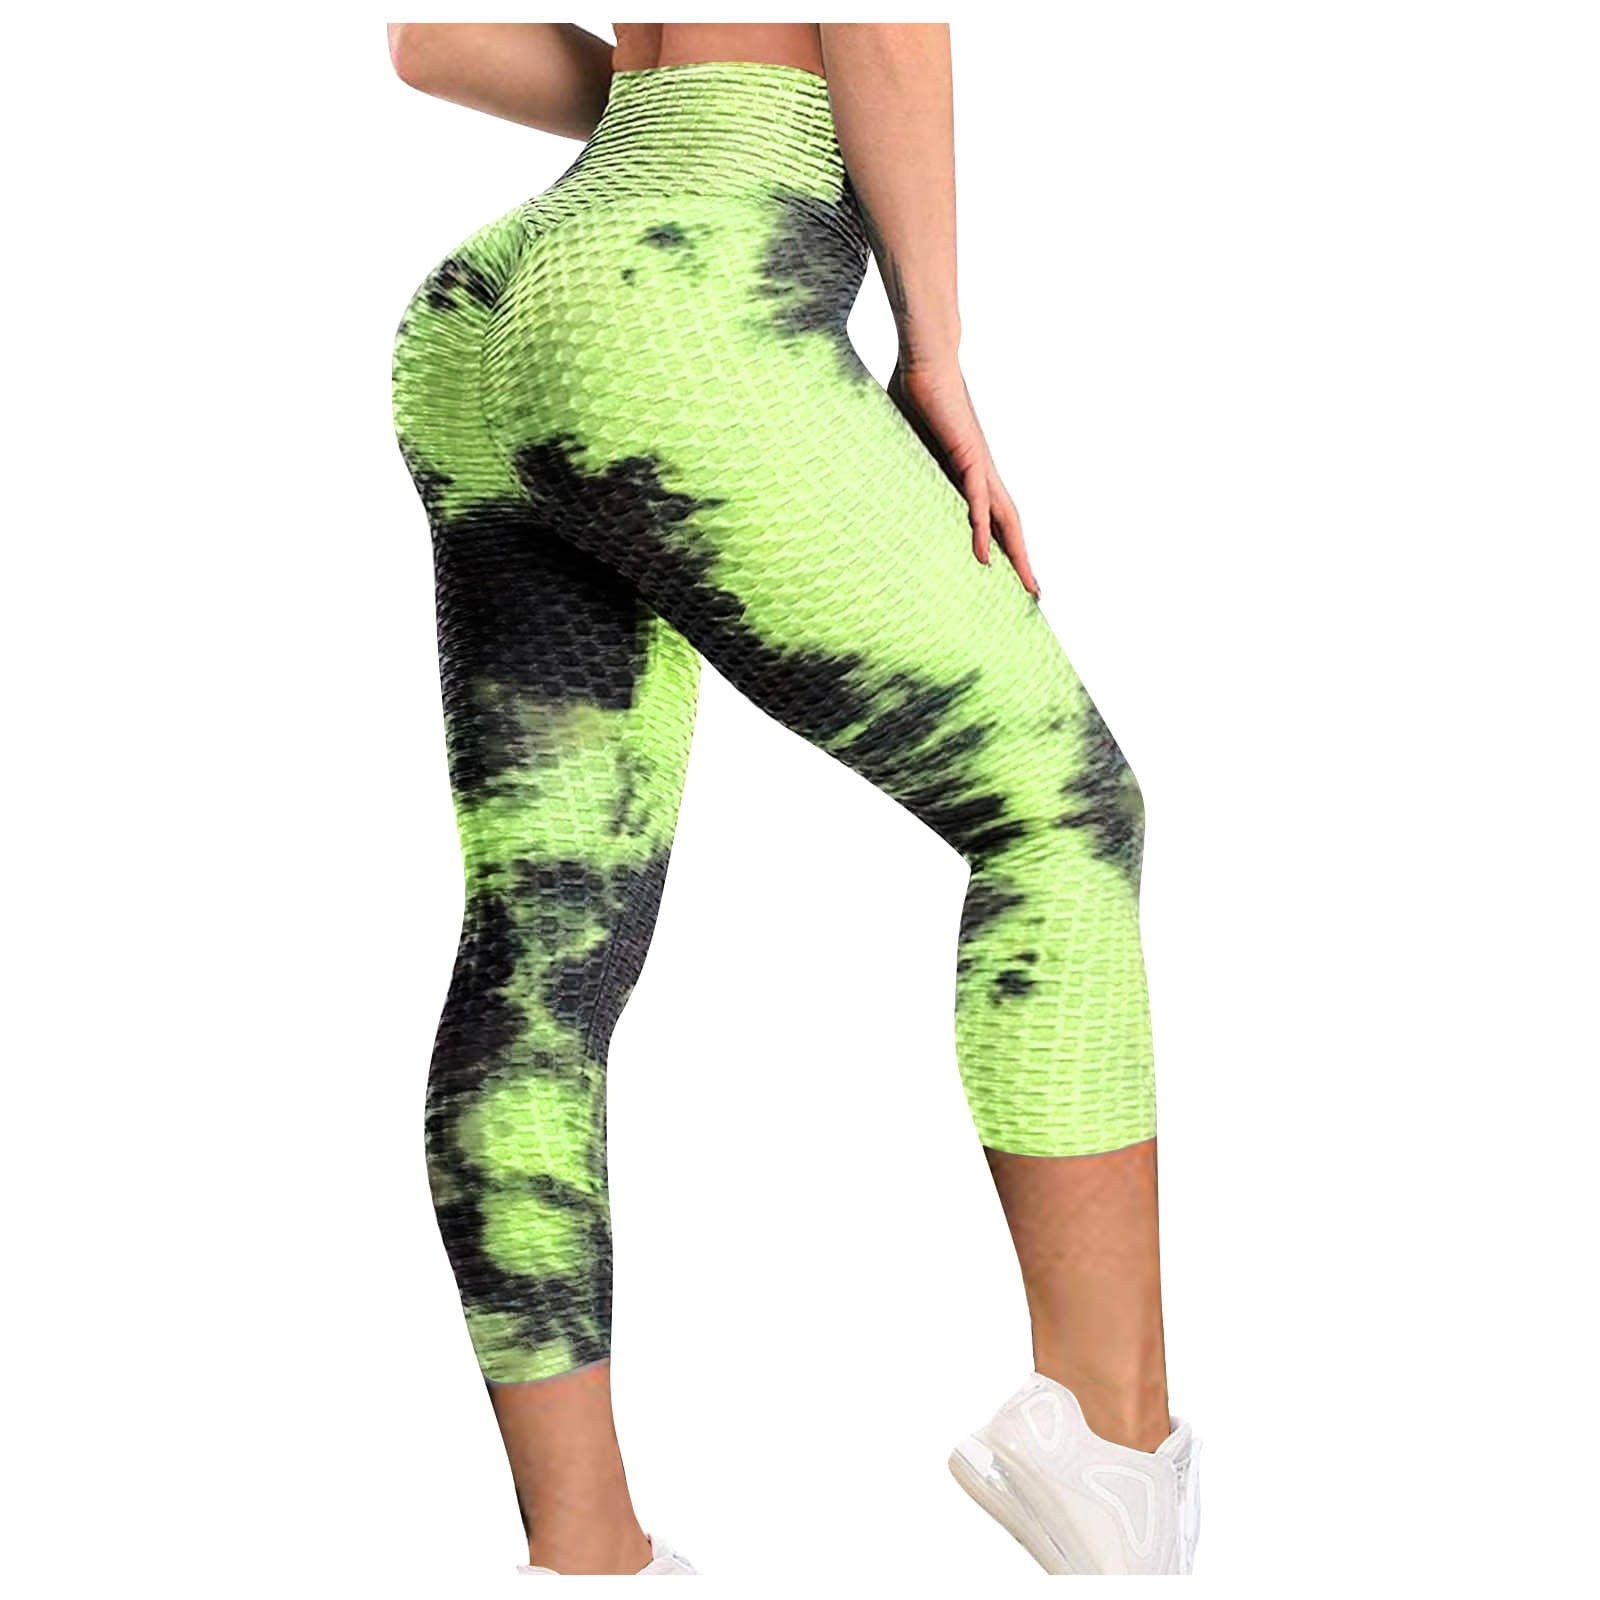 Dtydtpe Yoga Pants, Women's Print Workout Pants Tummy Control